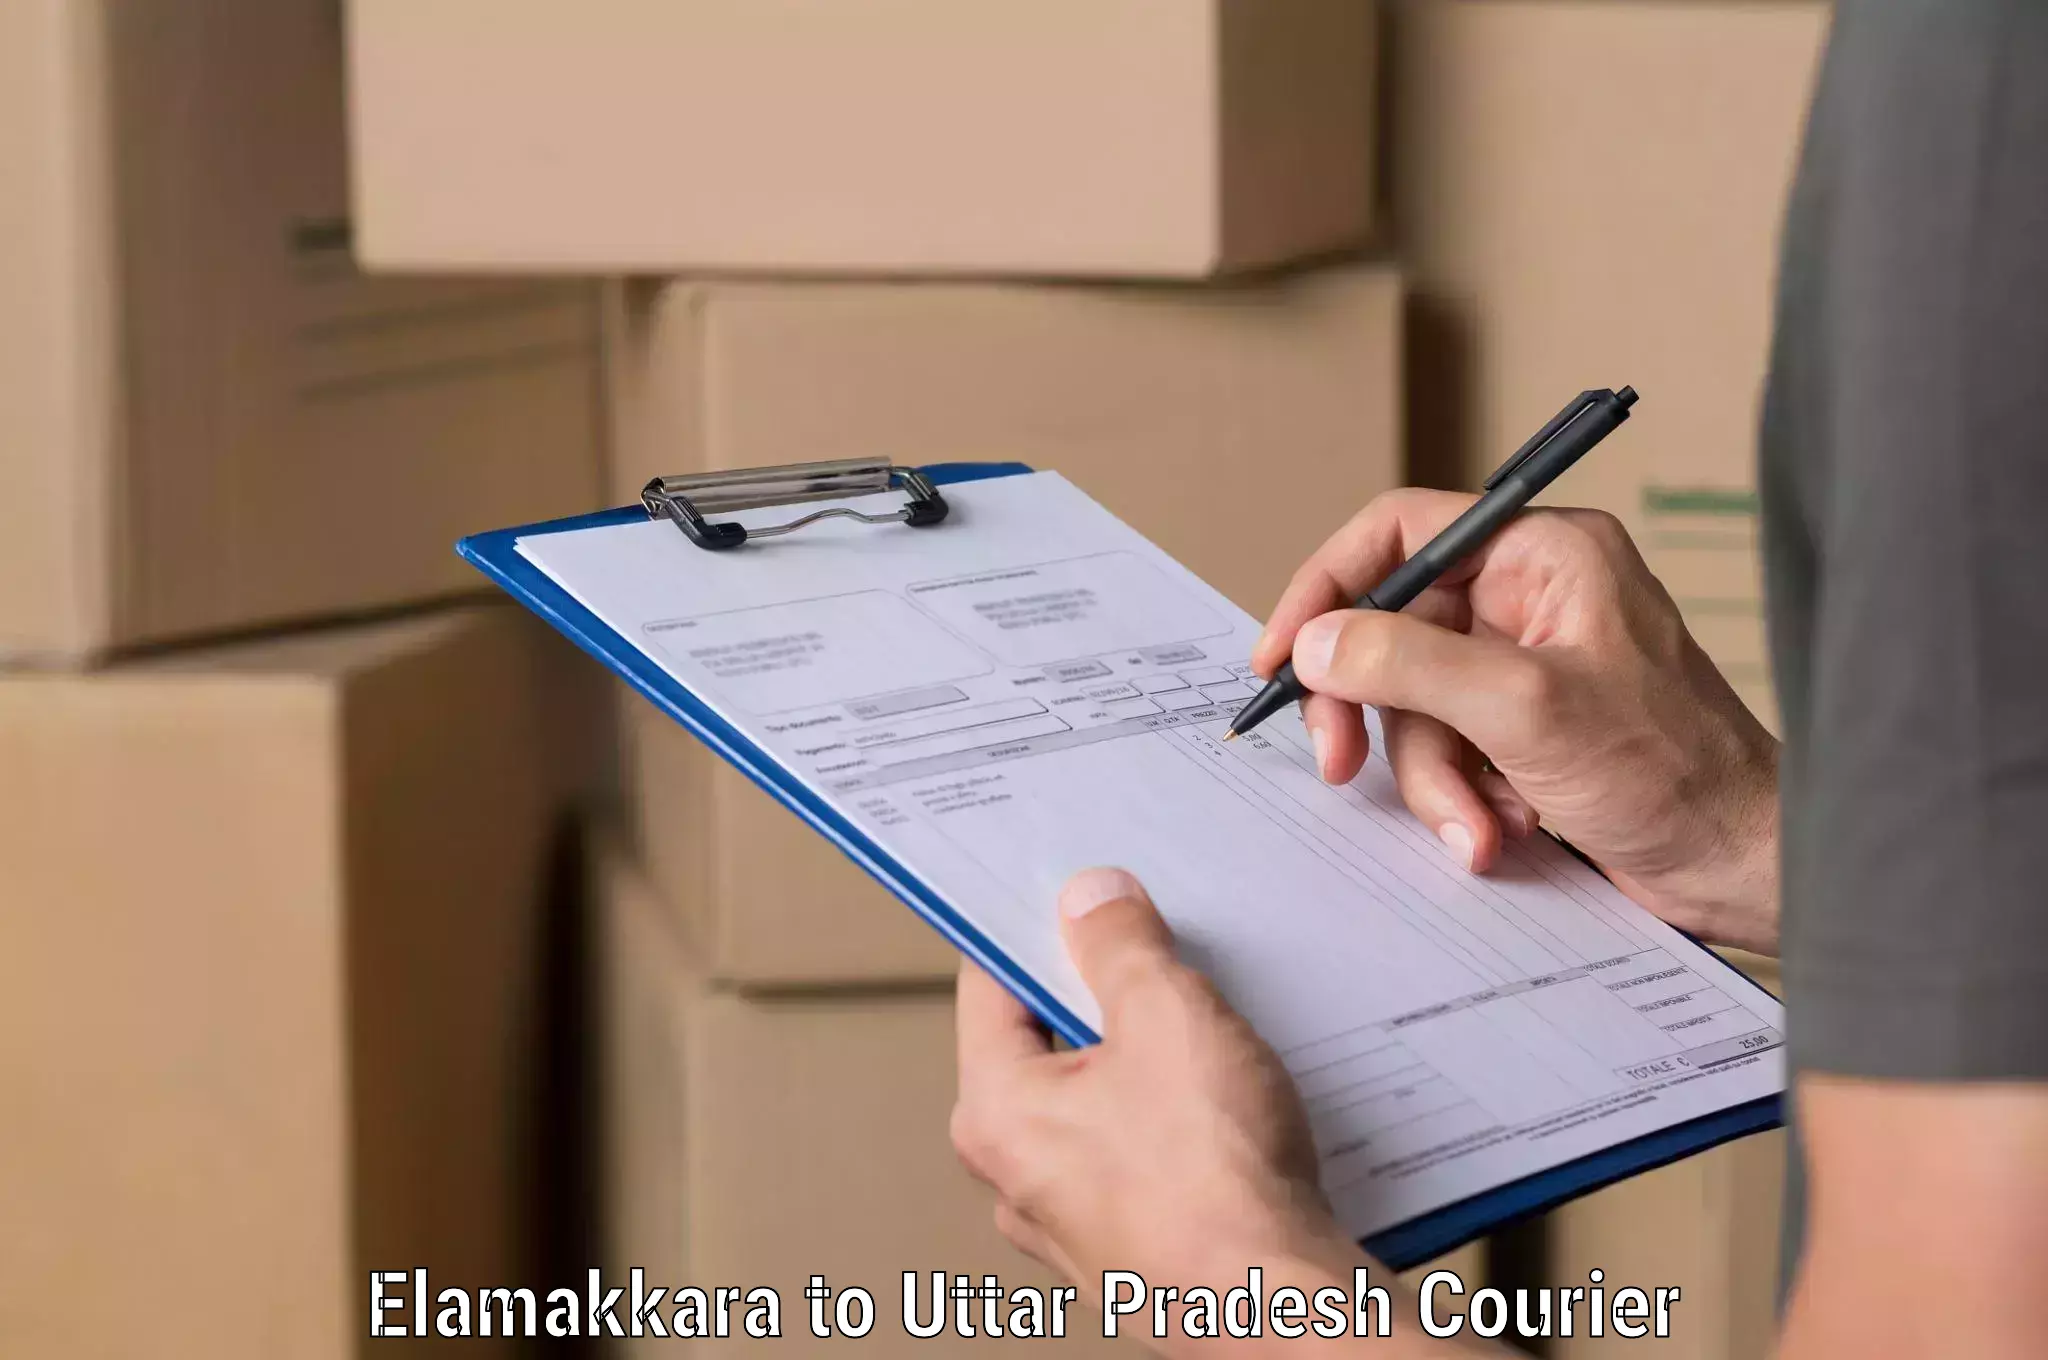 Trackable shipping service Elamakkara to Aligarh